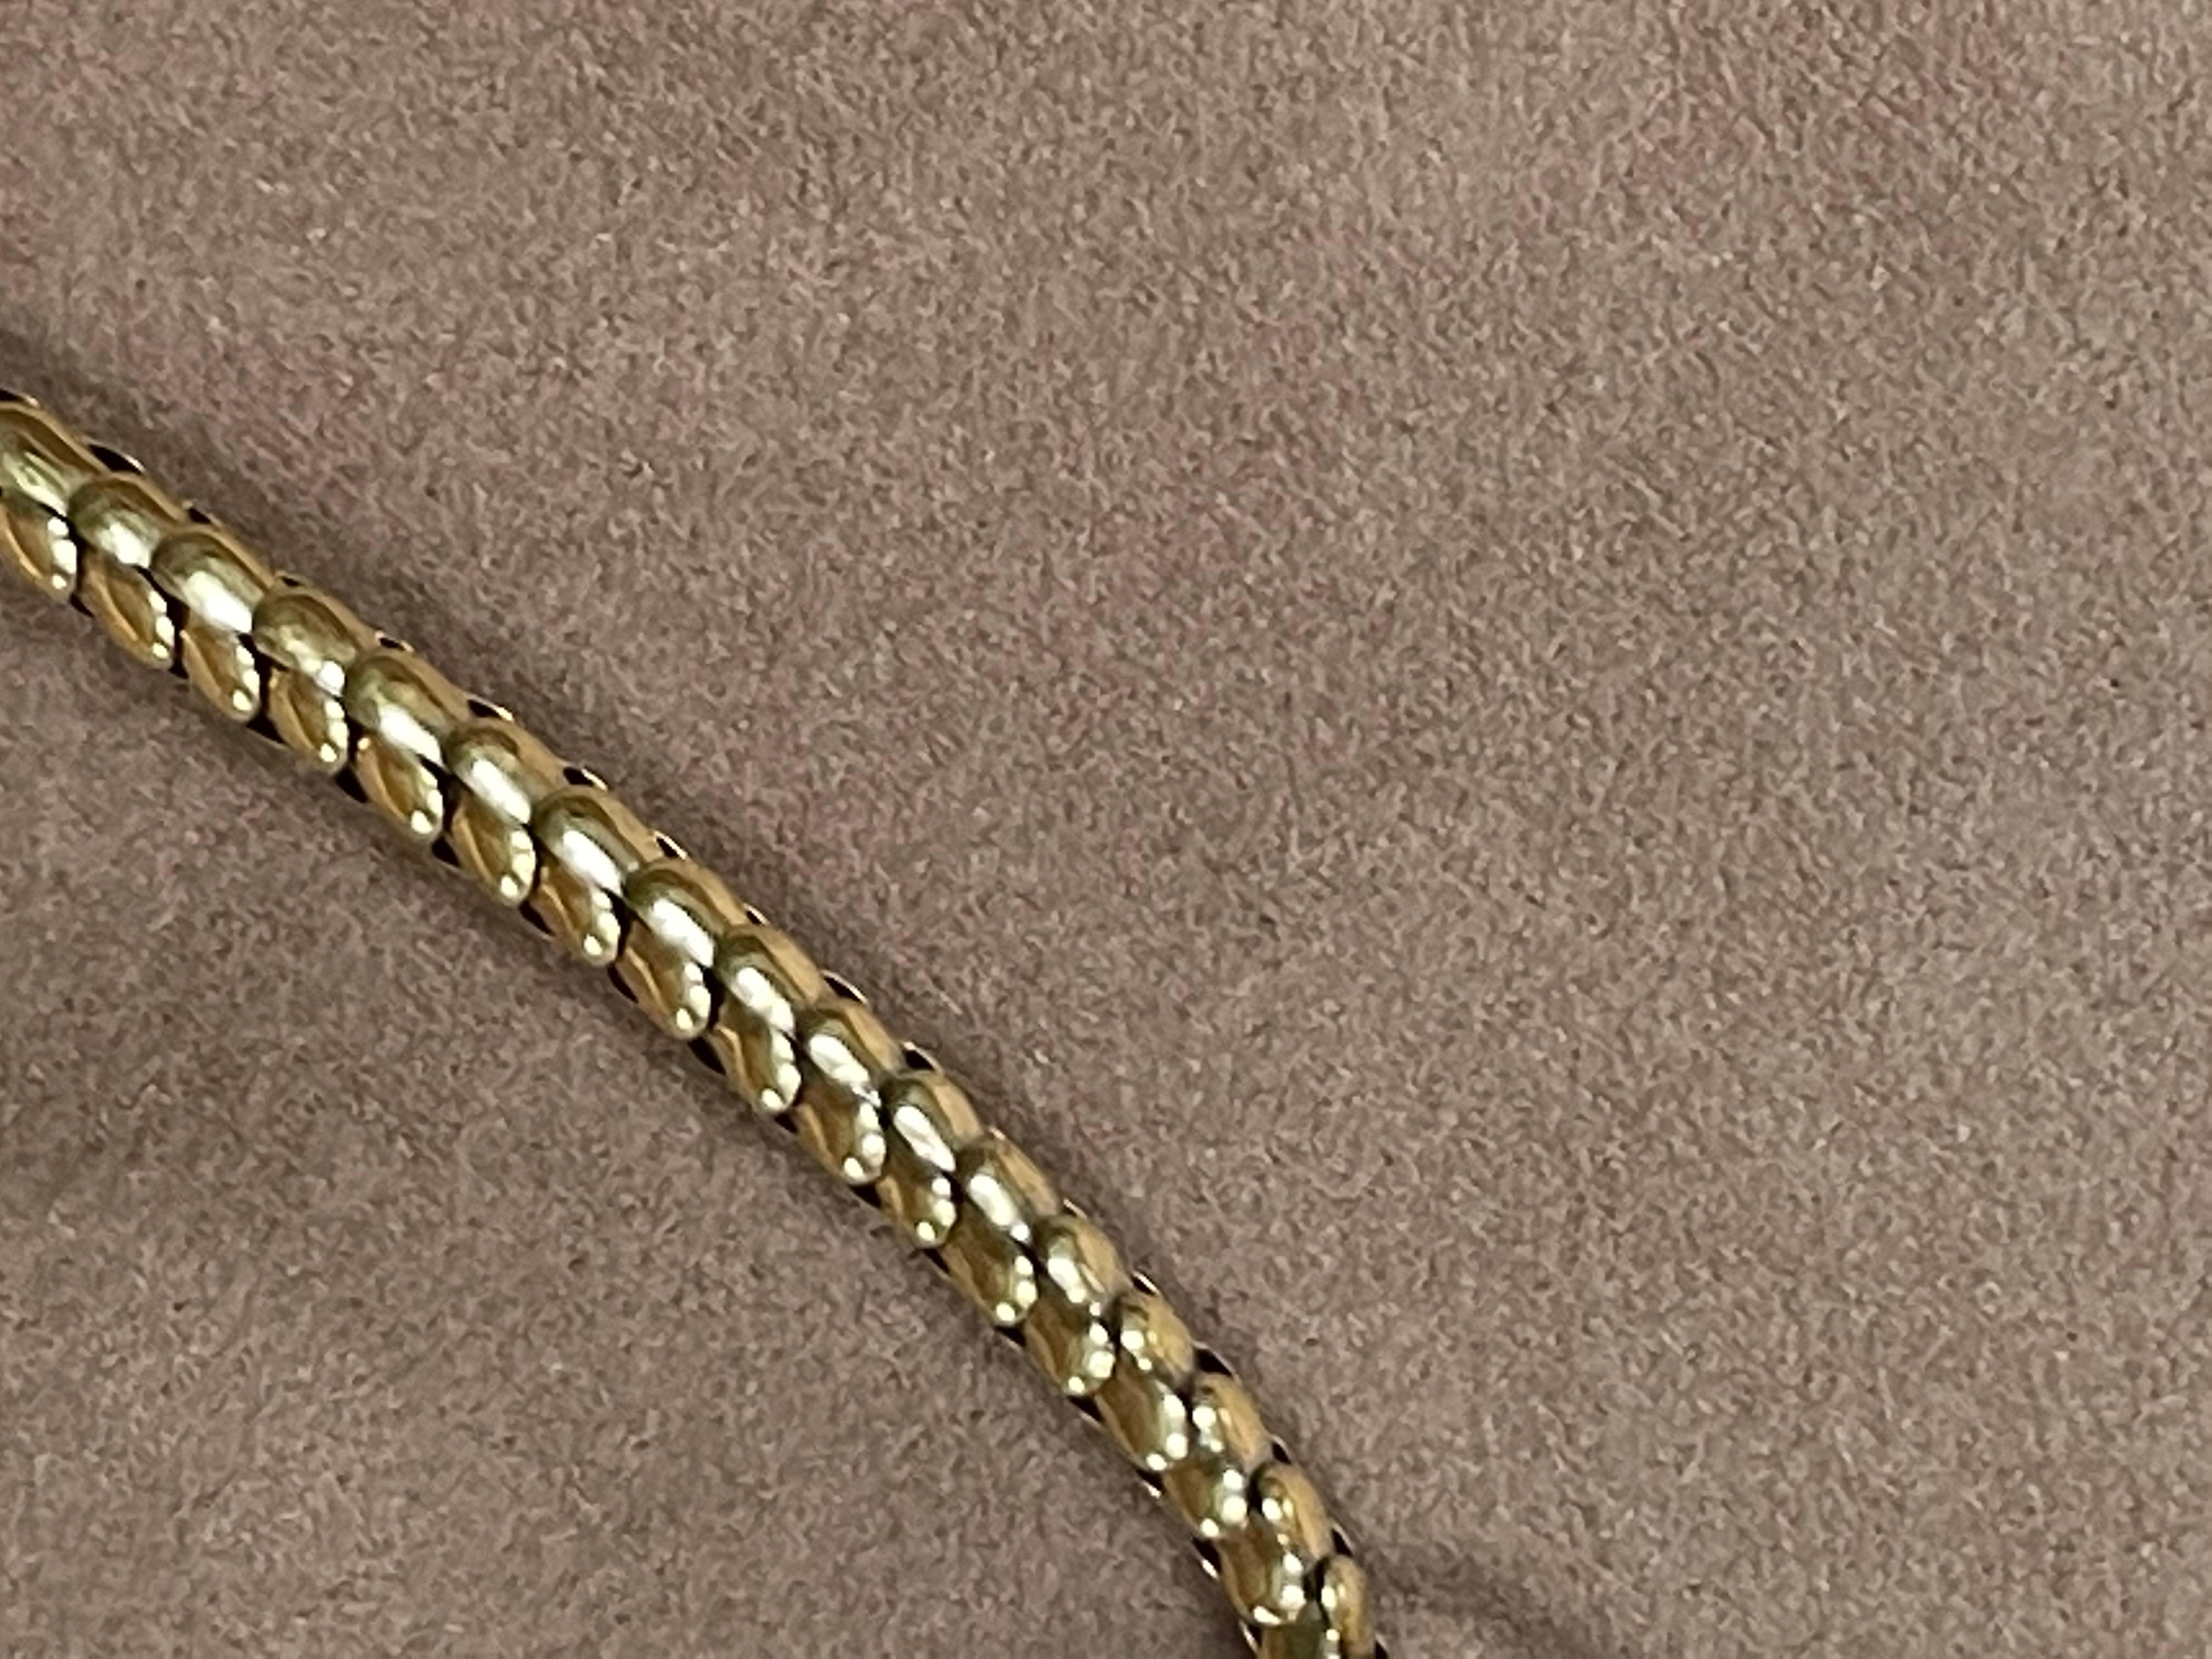 cartier snake necklace